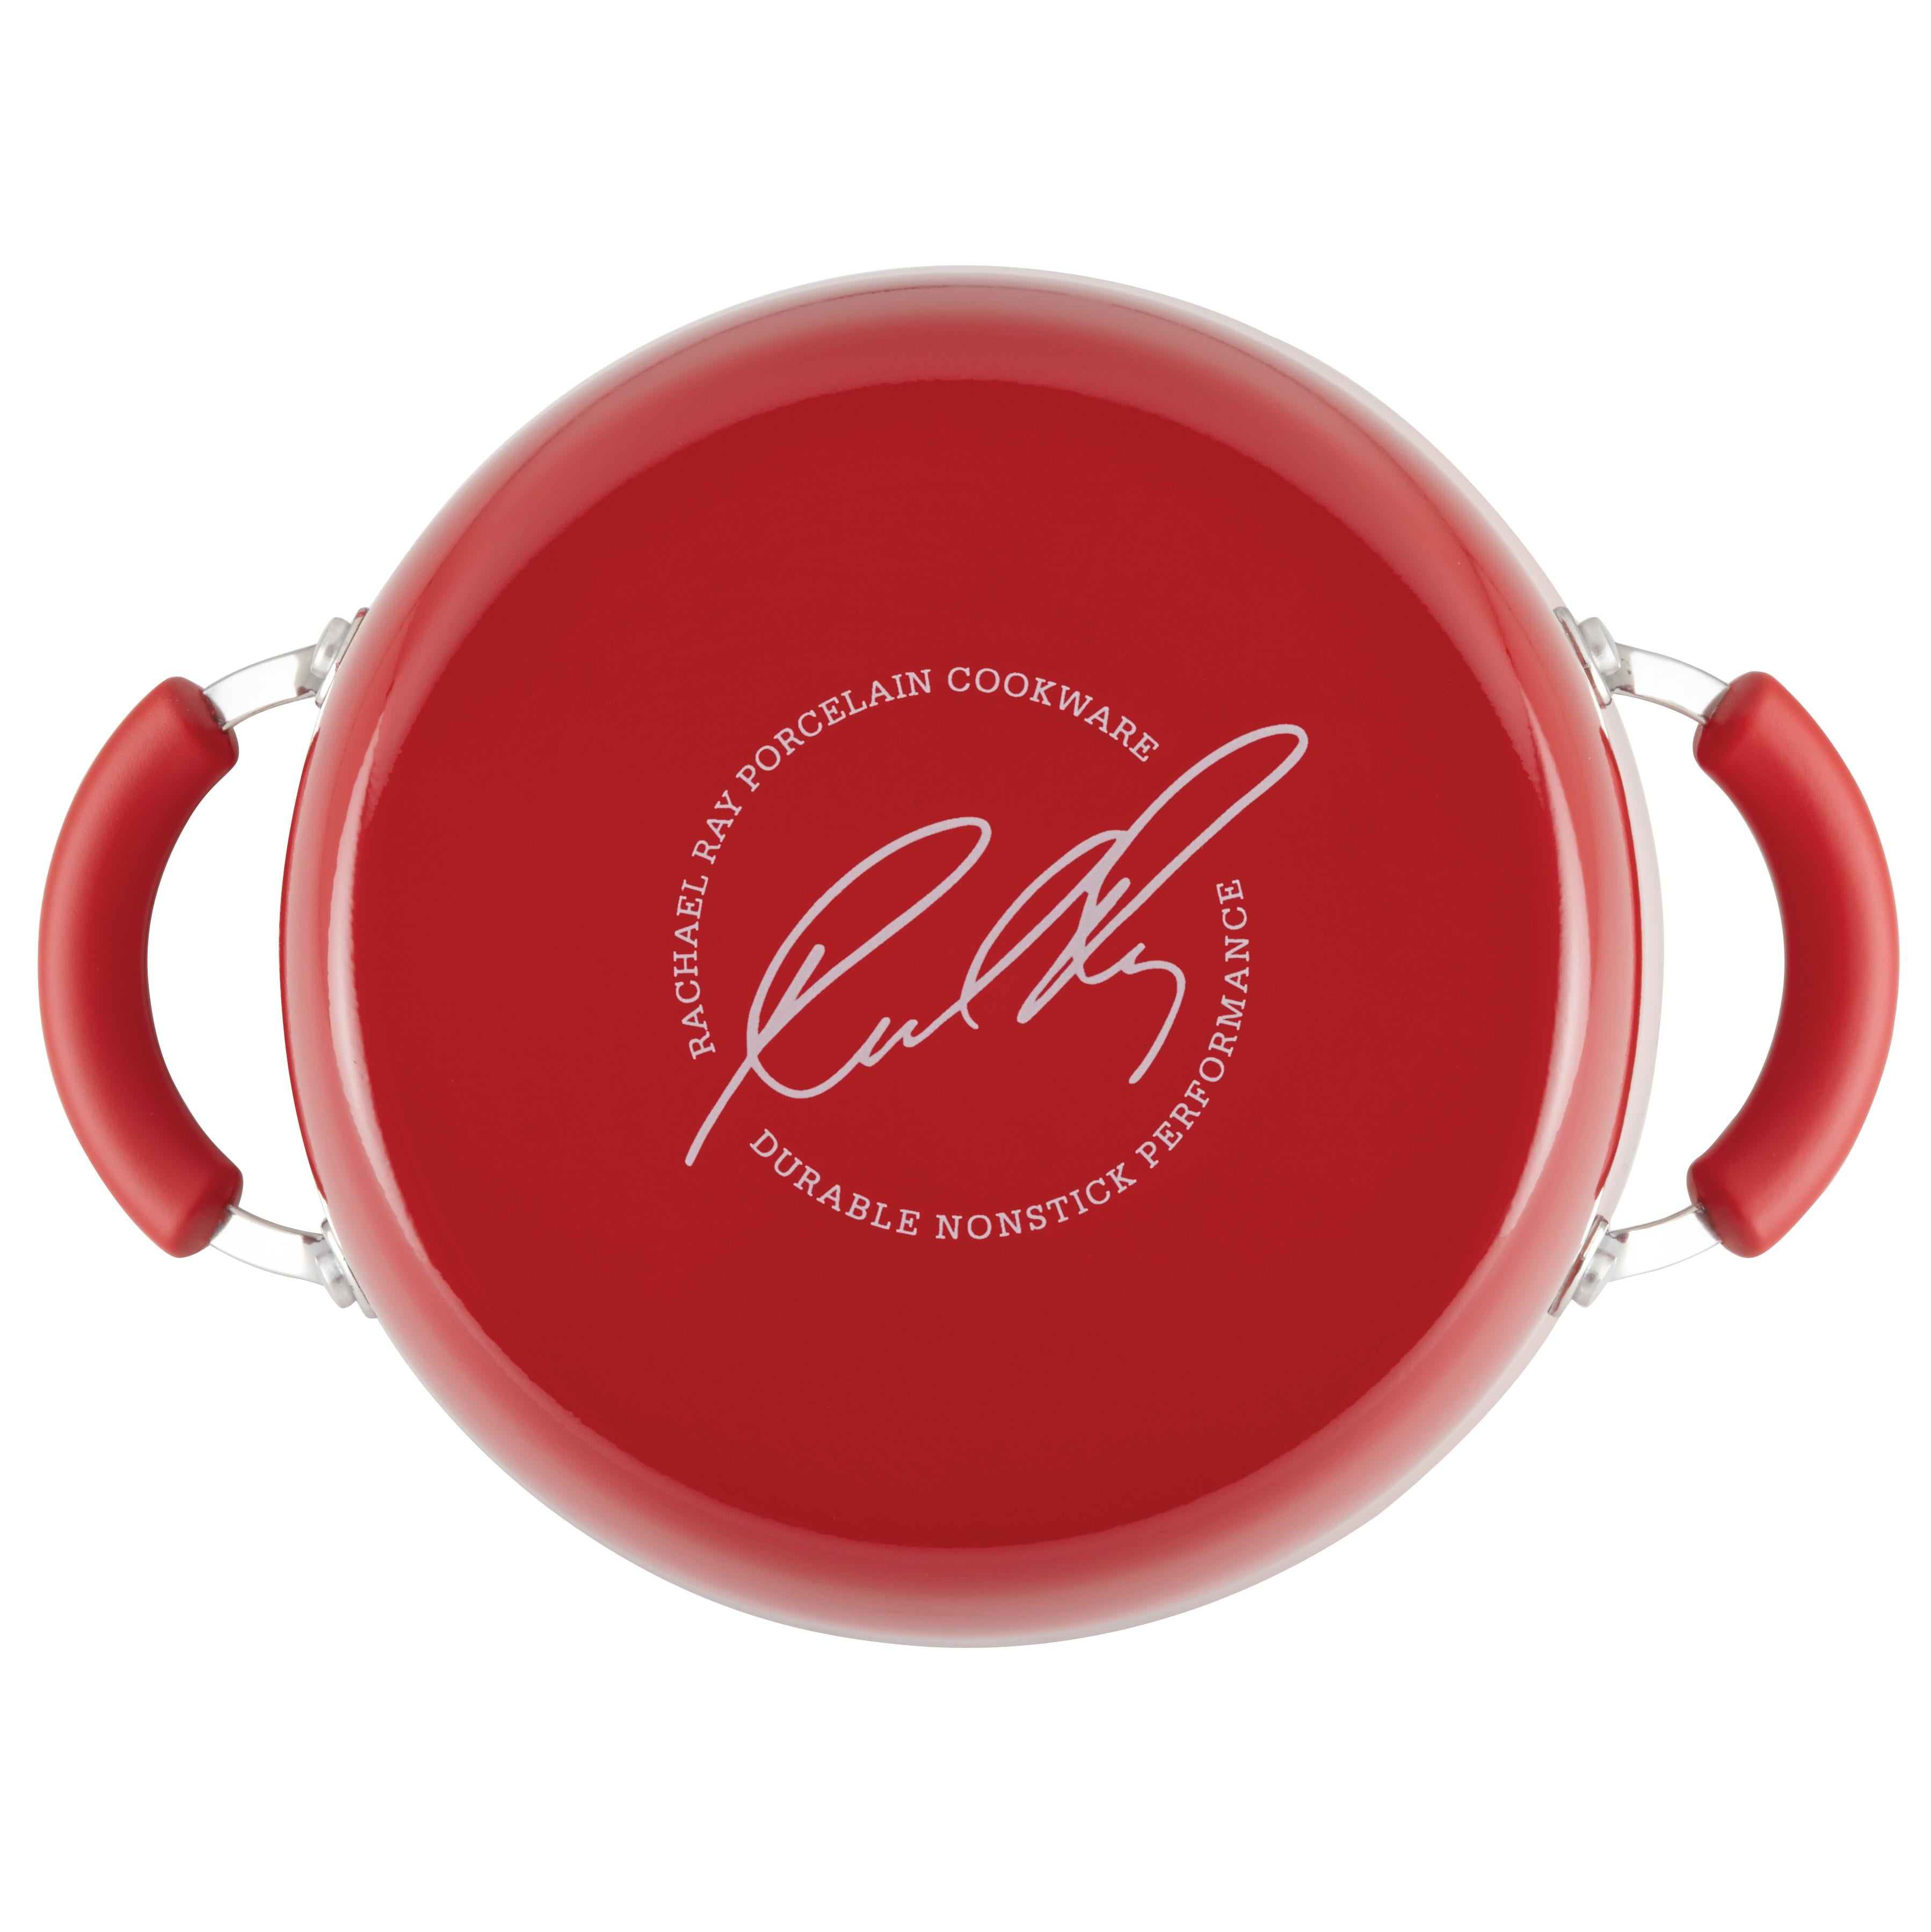 Rachael Ray 3 oz. Red Stoneware Baking Pans/Ramekins - Set of 4 - MINT